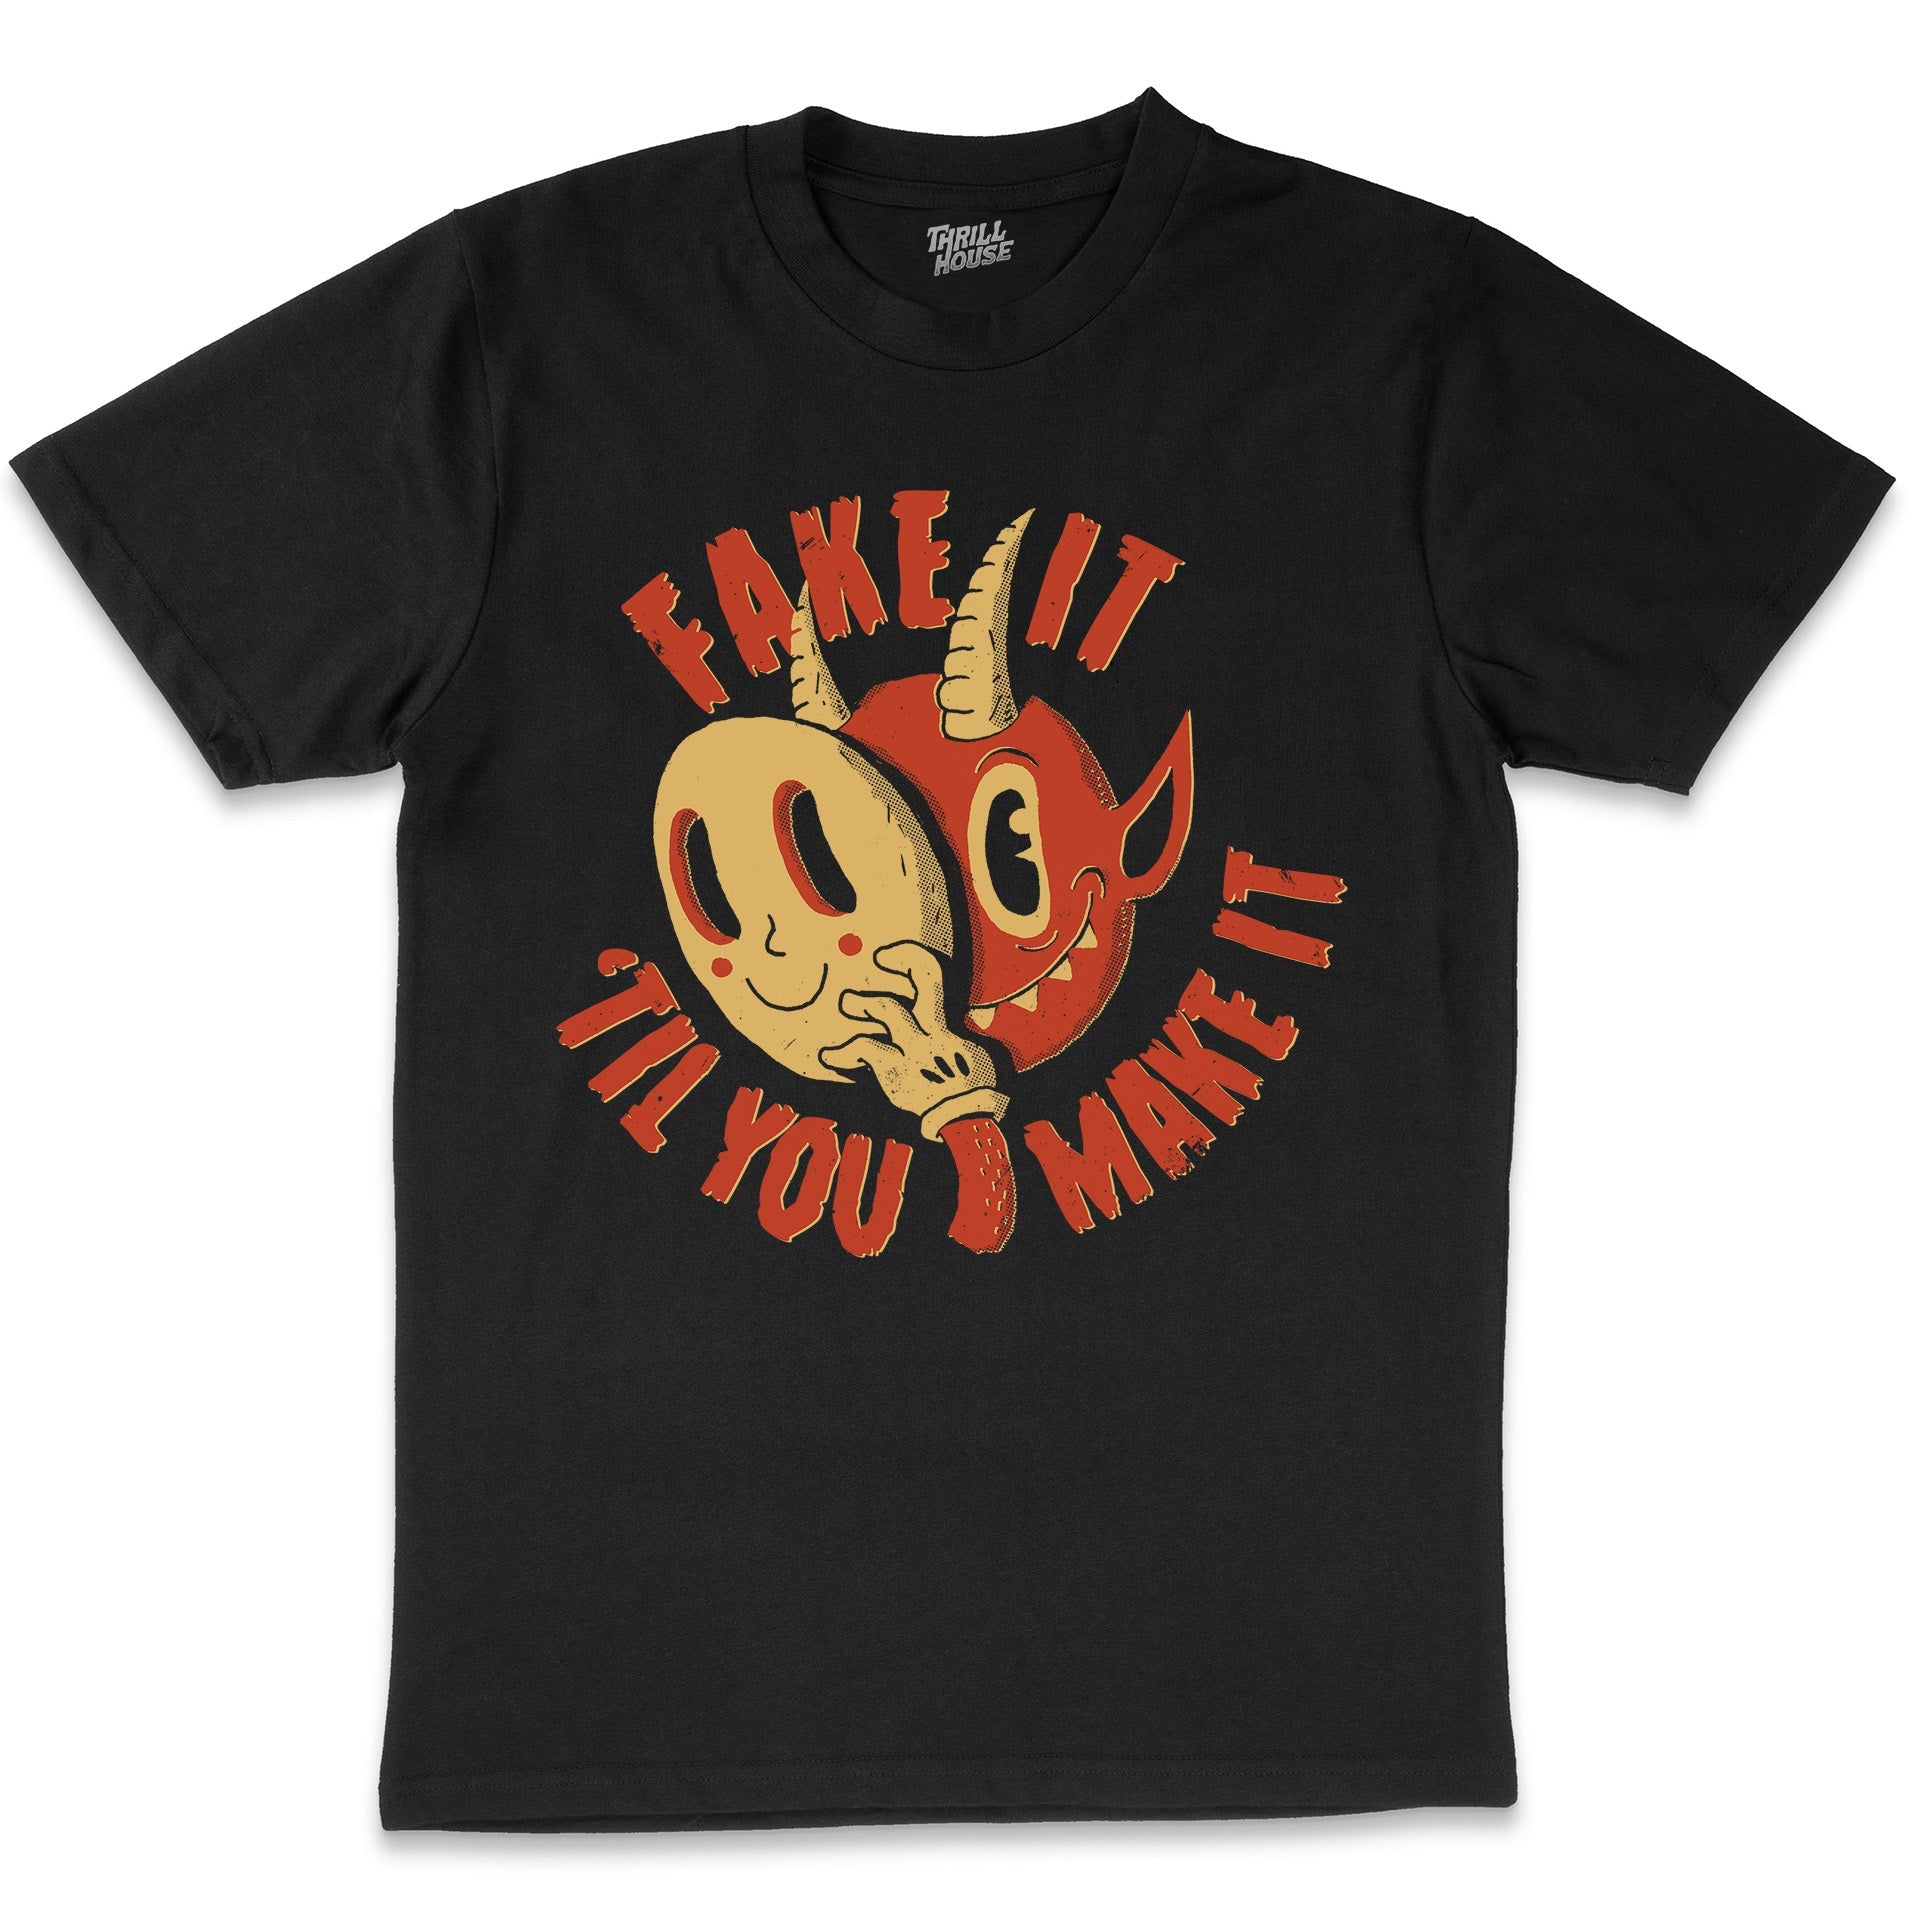 Fake It Til You Make It Funny Motivational Slogan Dark Devil Demon Cotton T-Shirt